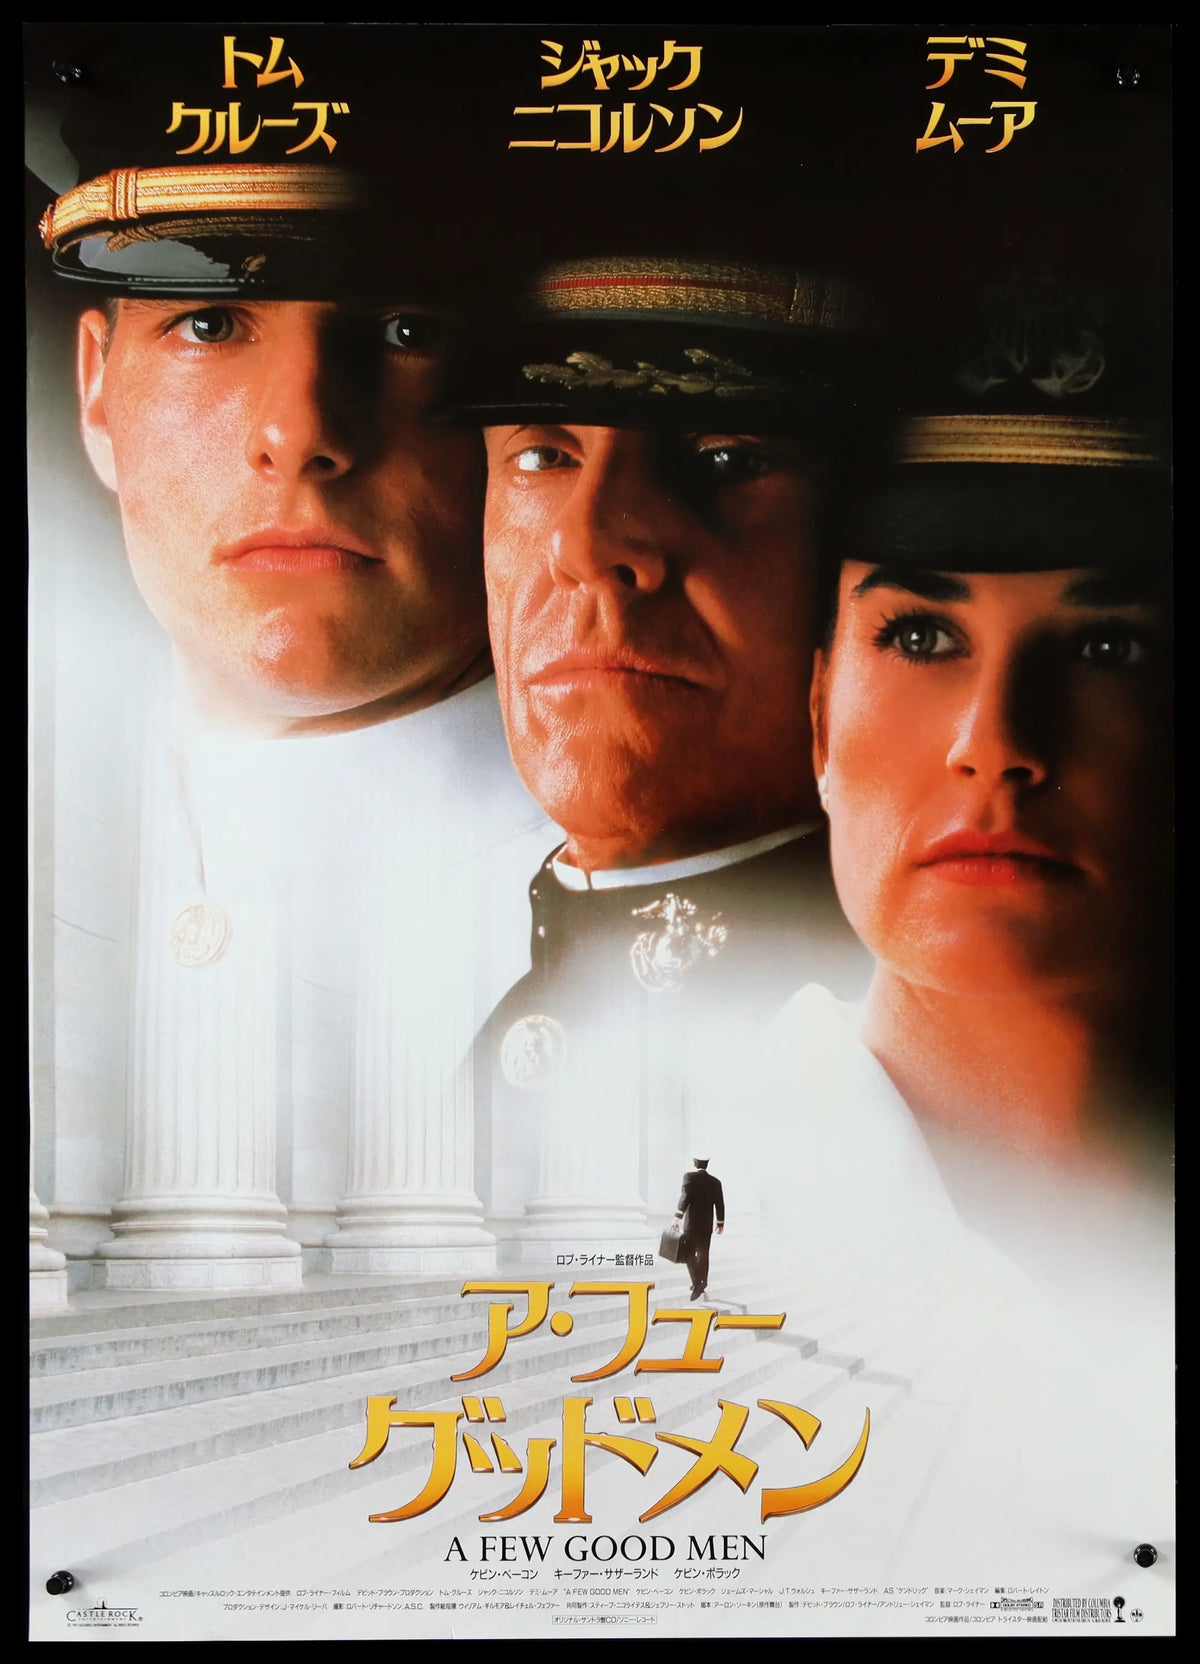 Few Good Men (1992) original movie poster for sale at Original Film Art